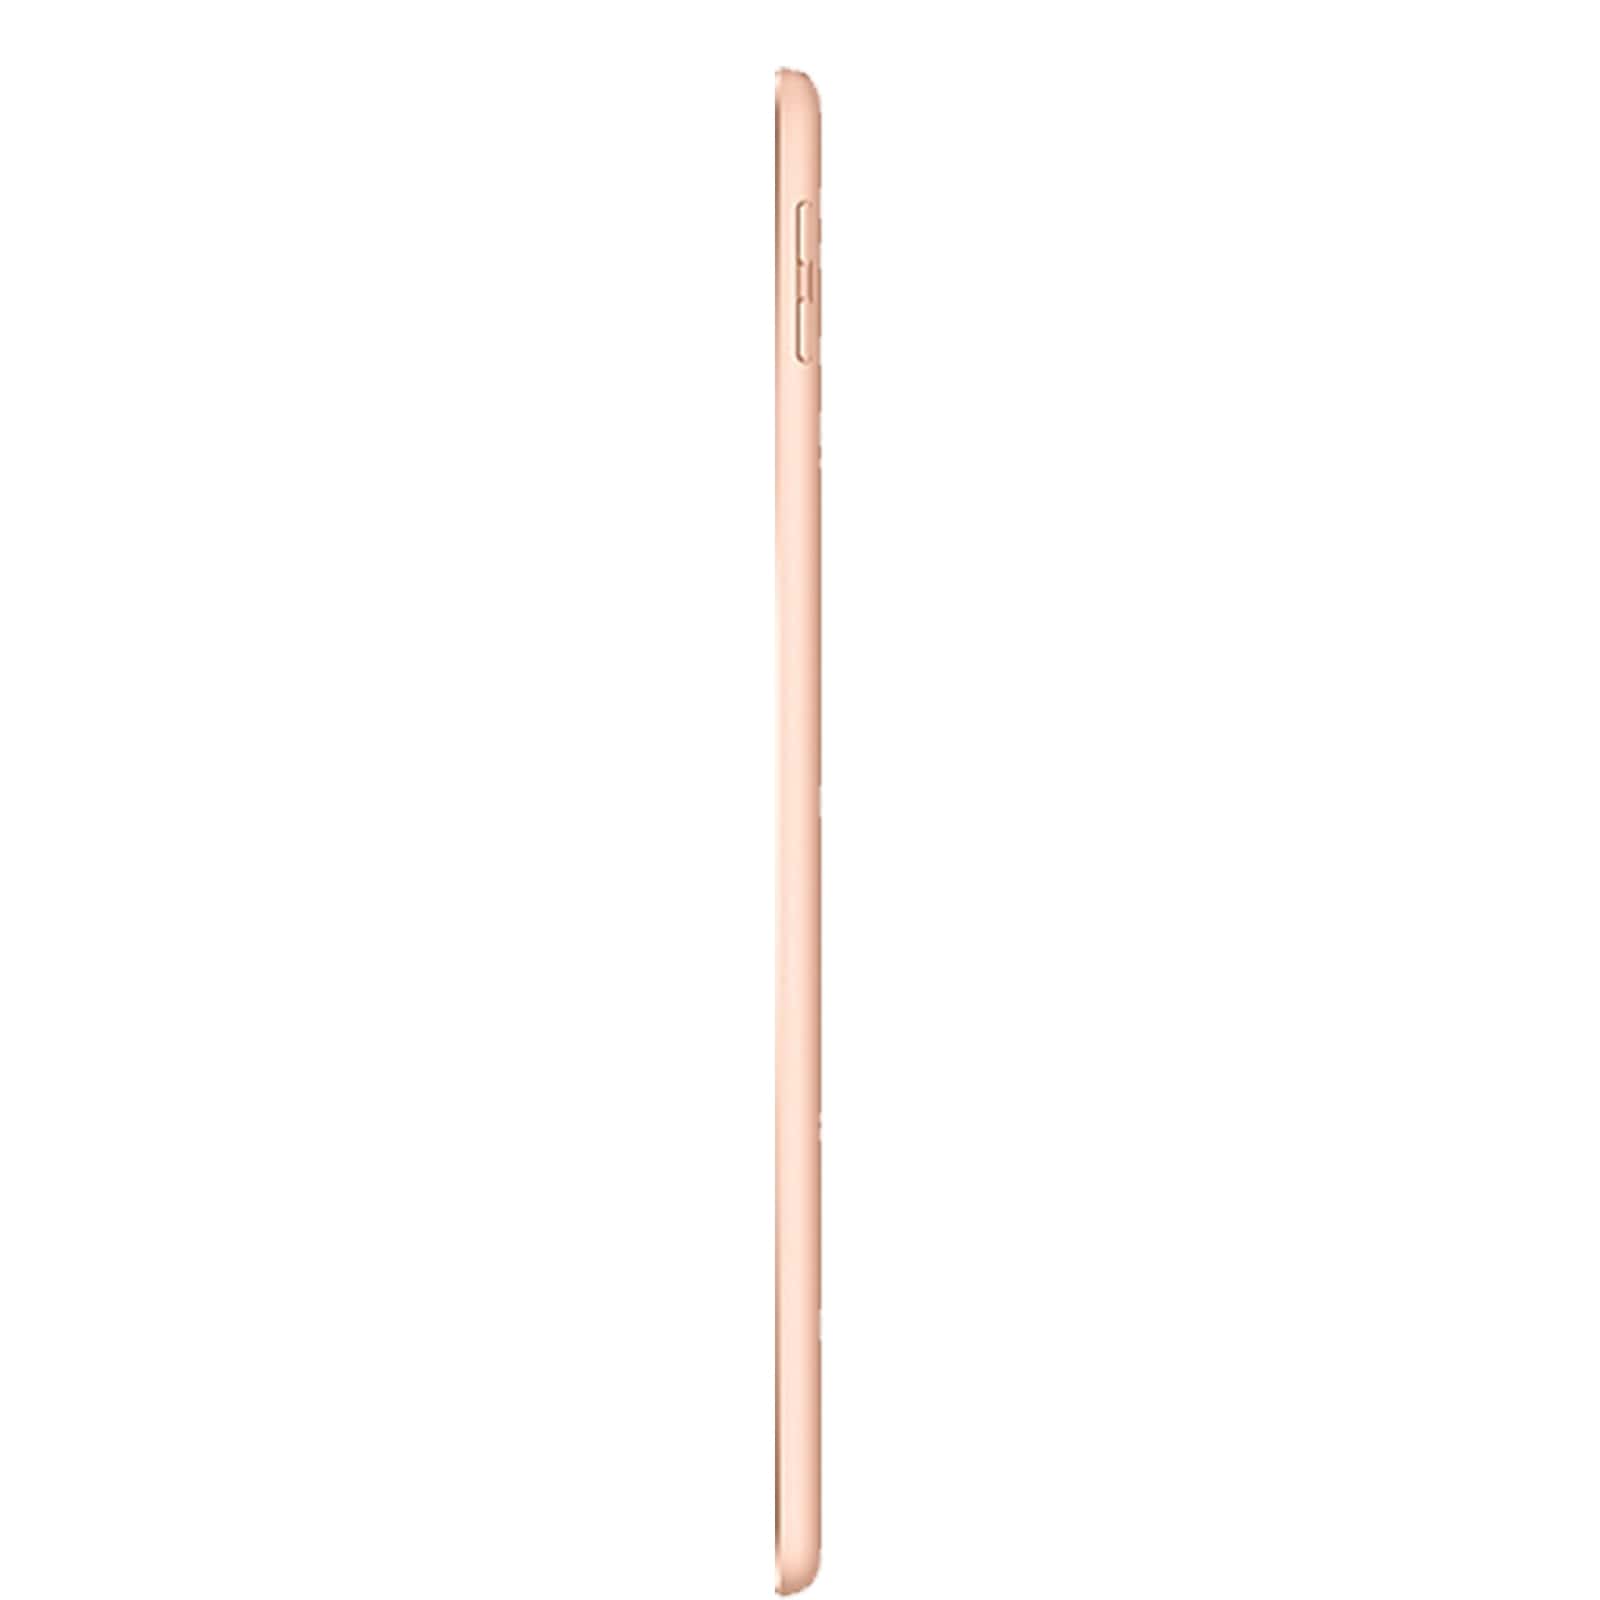 Apple iPad 6 32GB WiFi & Cellular Gold - Very Good